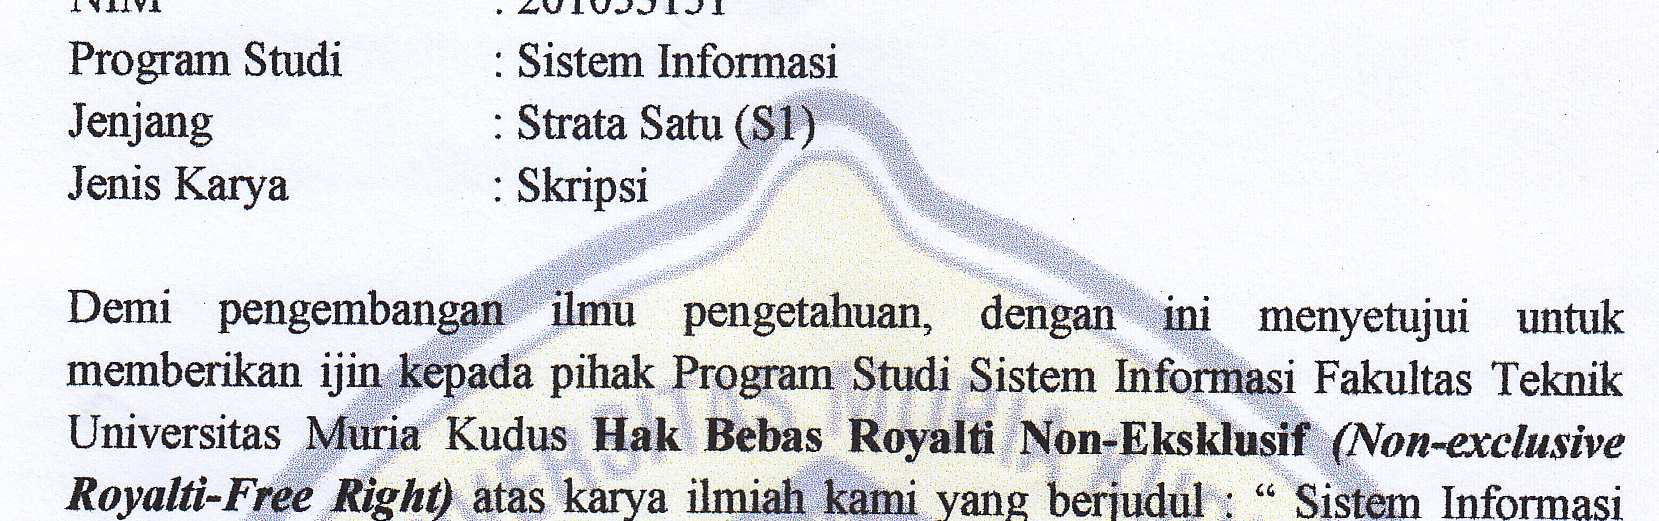 SURAT PERNYATAAN PERSETUJUAN PUBLIKASI KARYA ILMIAH UNTUK KEPENTINGAN AKADEMIS Yang bertanda tangan di bawah ini, saya : Nama : Siti Nur Zaroah NIM : 201053151